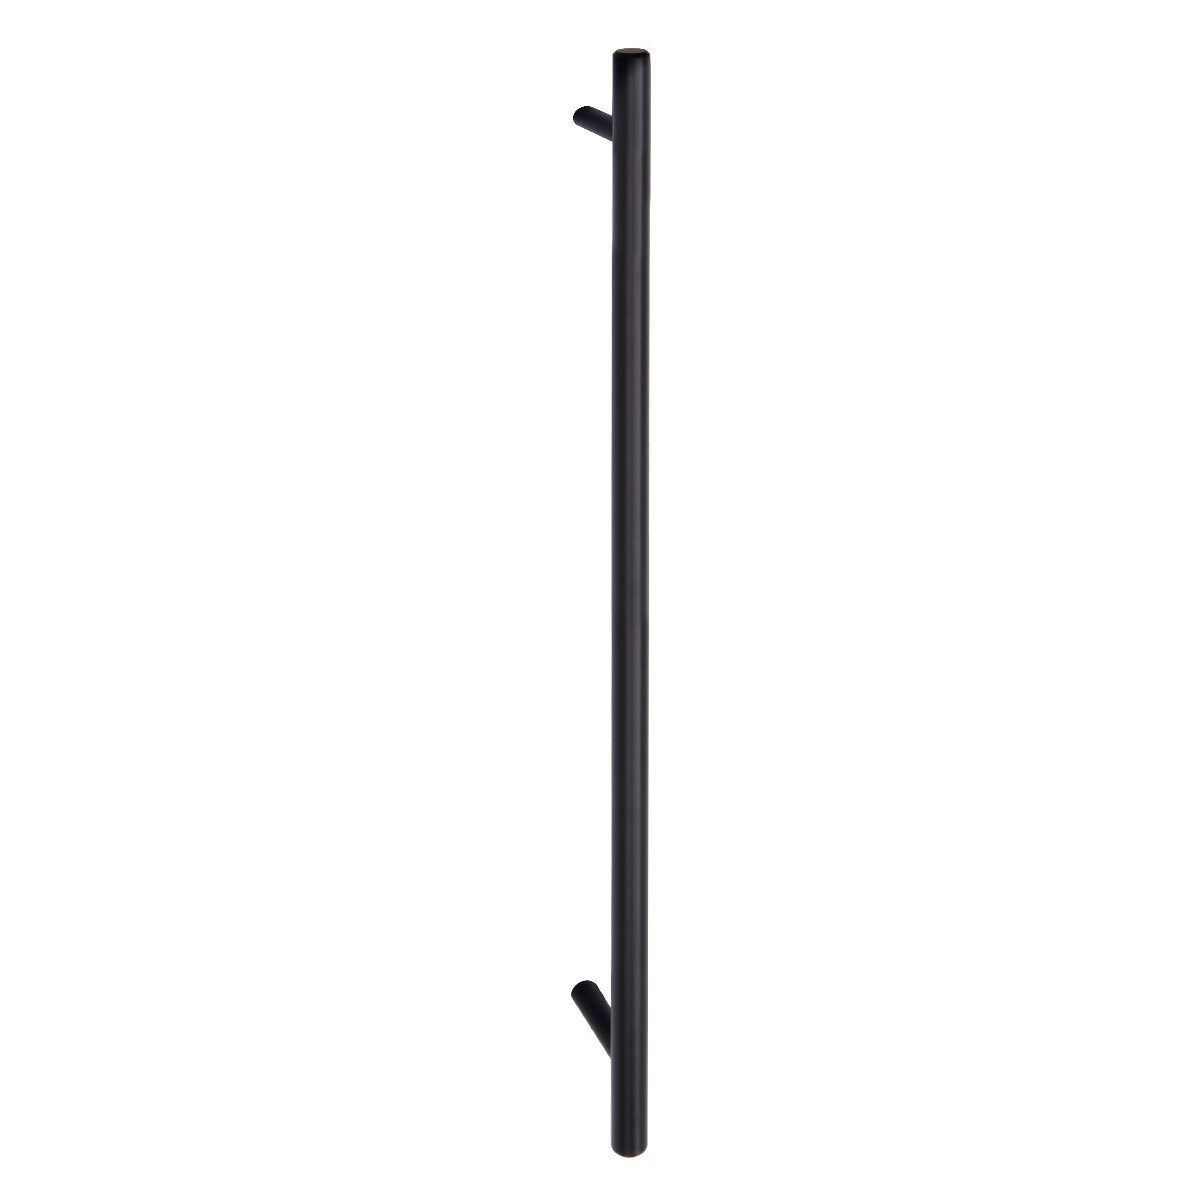 Amazon Basics Euro Bar Cabinet Handle (3/8-inch Diameter), 15-inch Length (12.63-inch Hole Center), Flat Black, 10-Pack - Like New